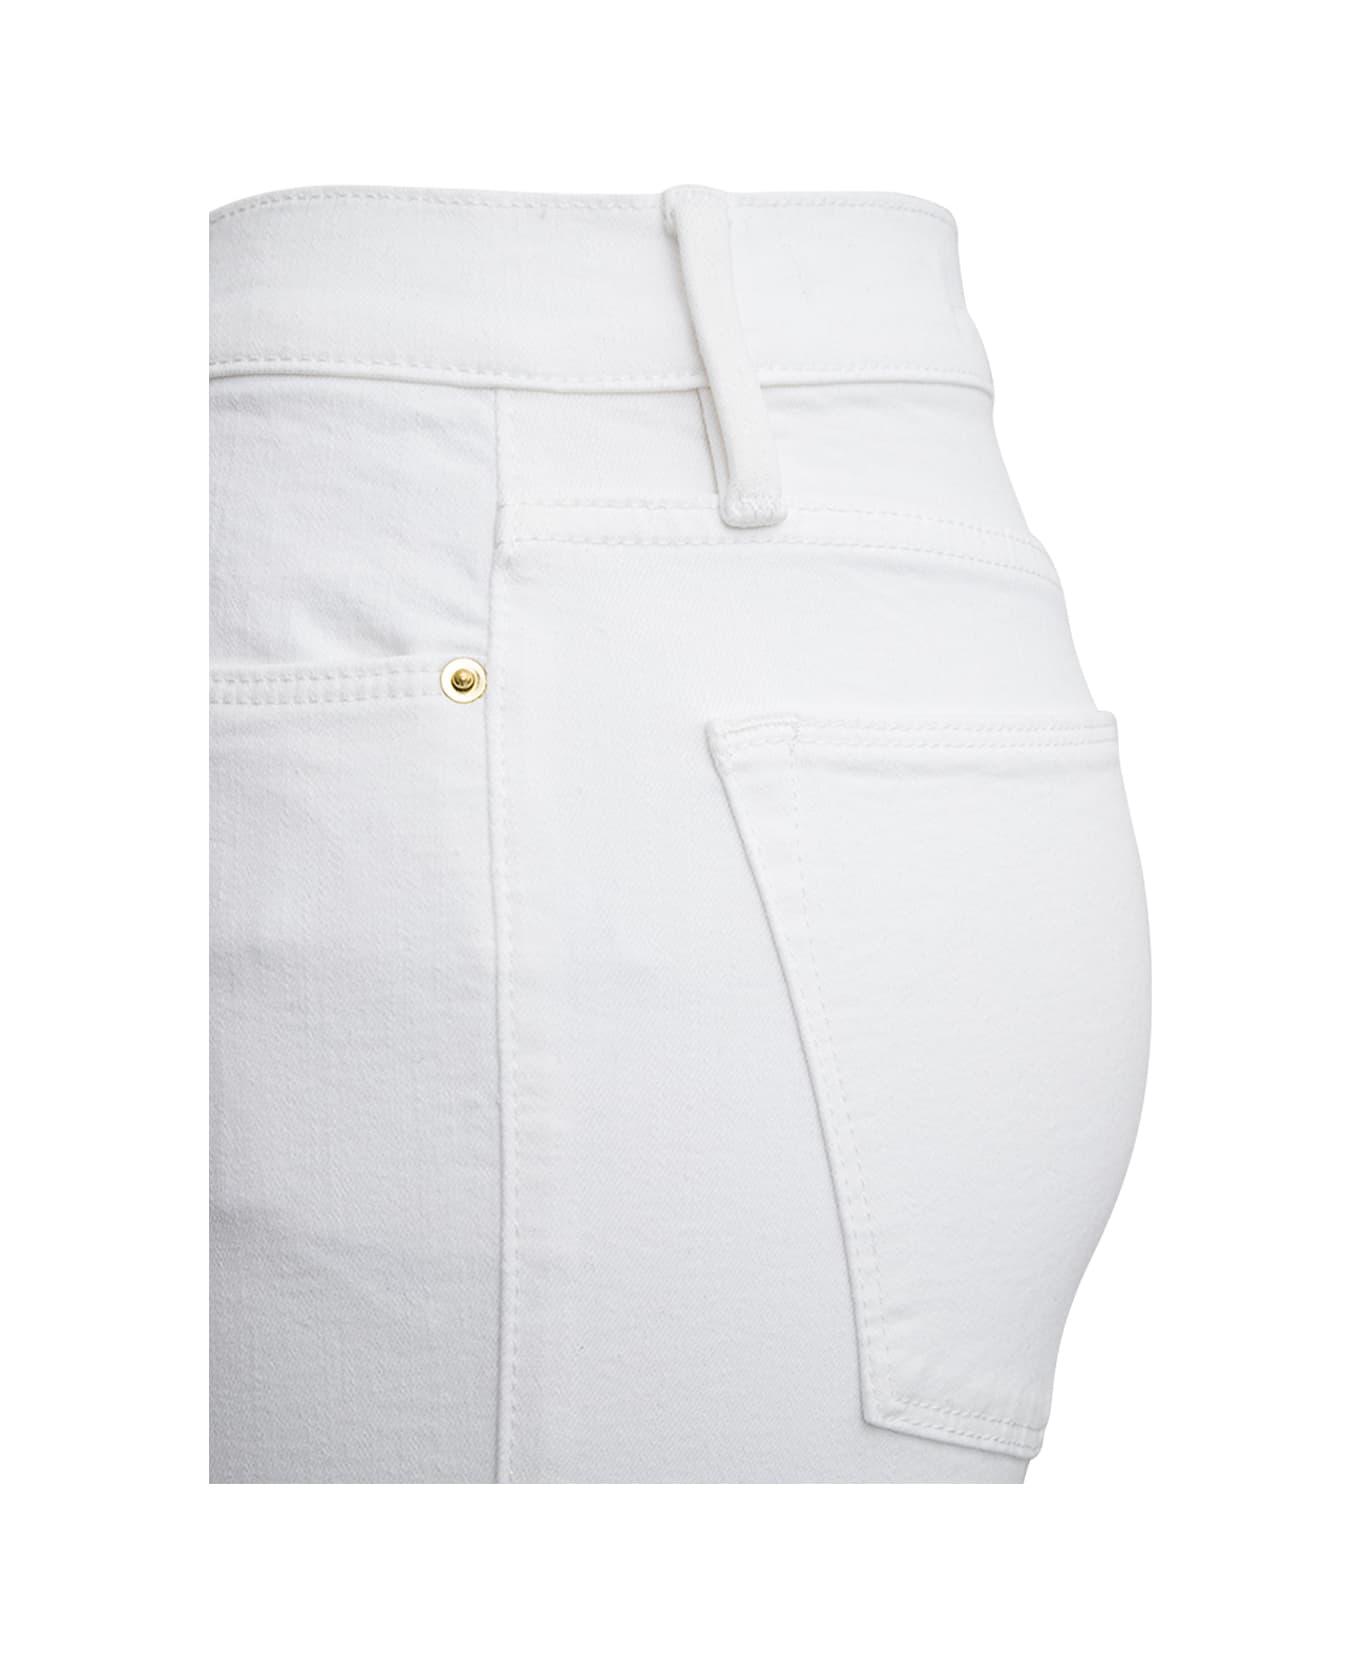 Frame Le High Straight White Denim Jeans - Bianco